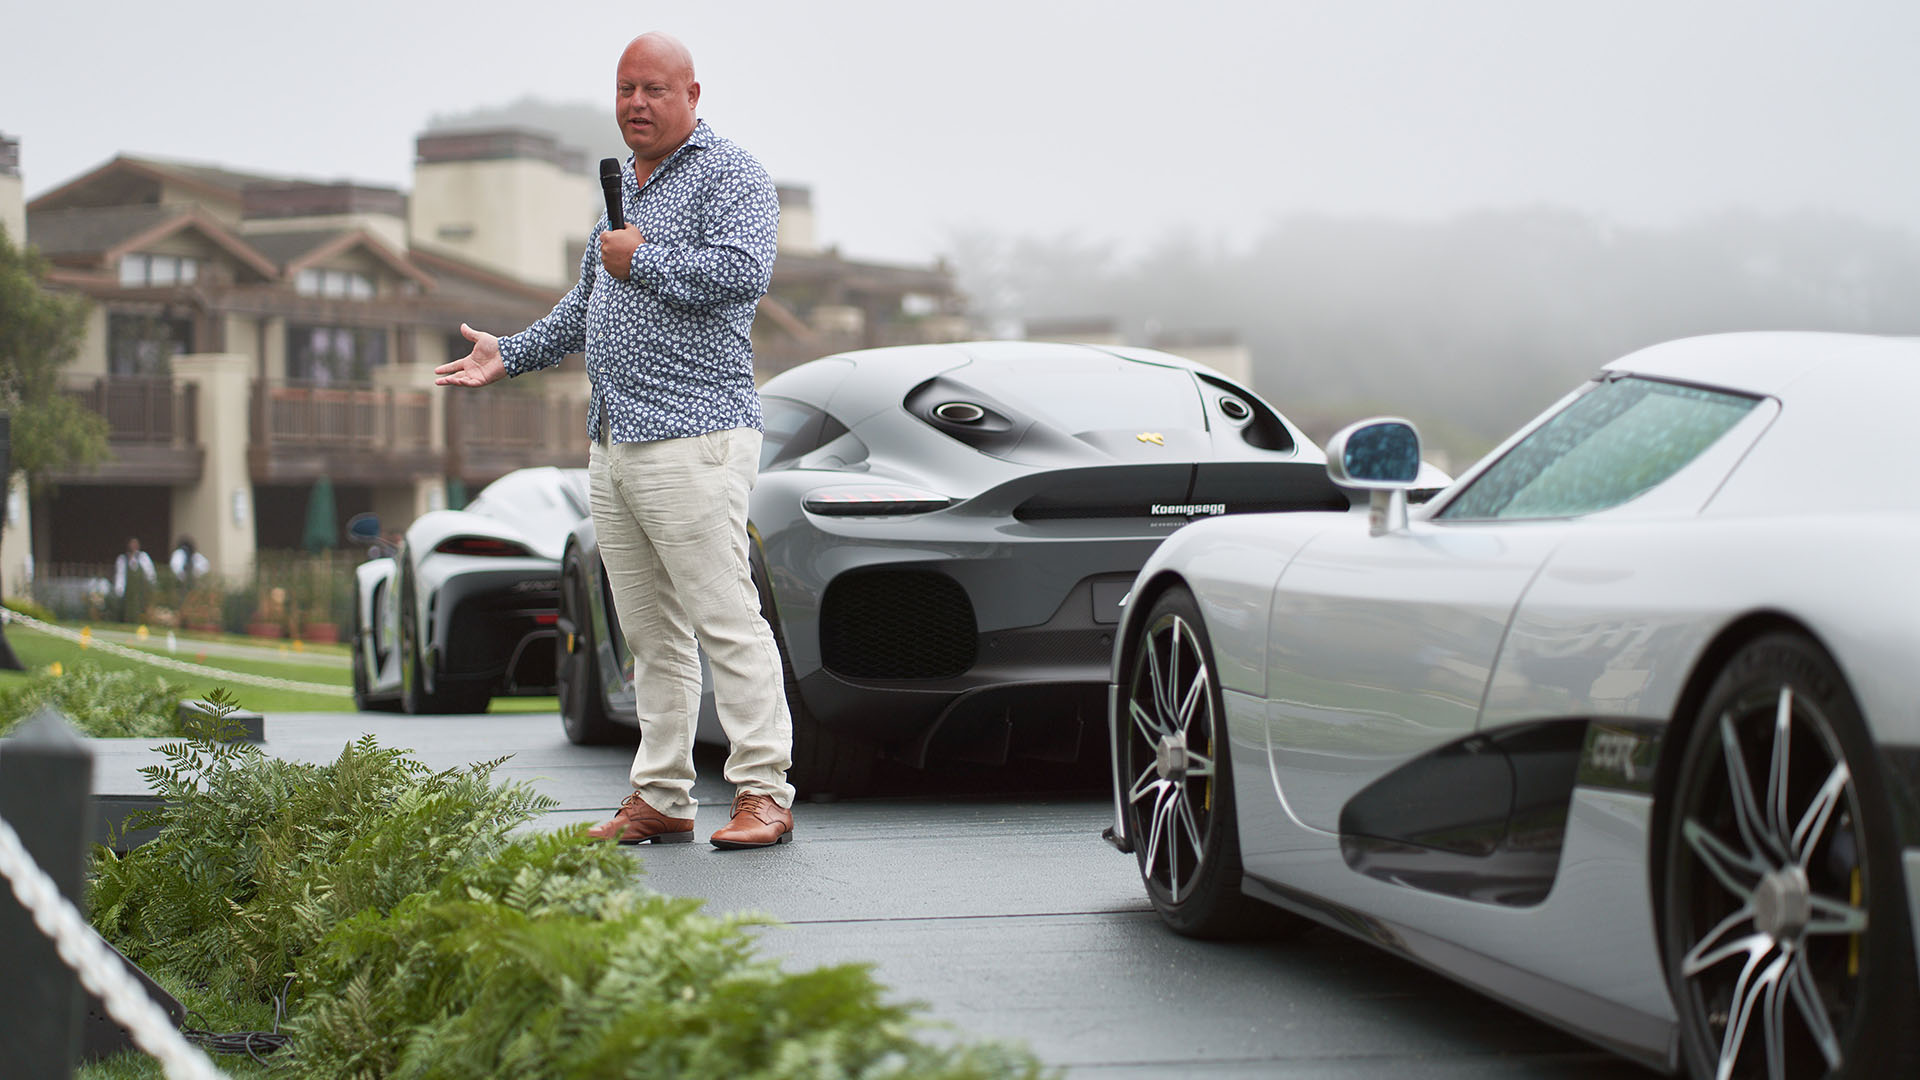 The new Koenigsegg Gemera at the Monterey Car Week